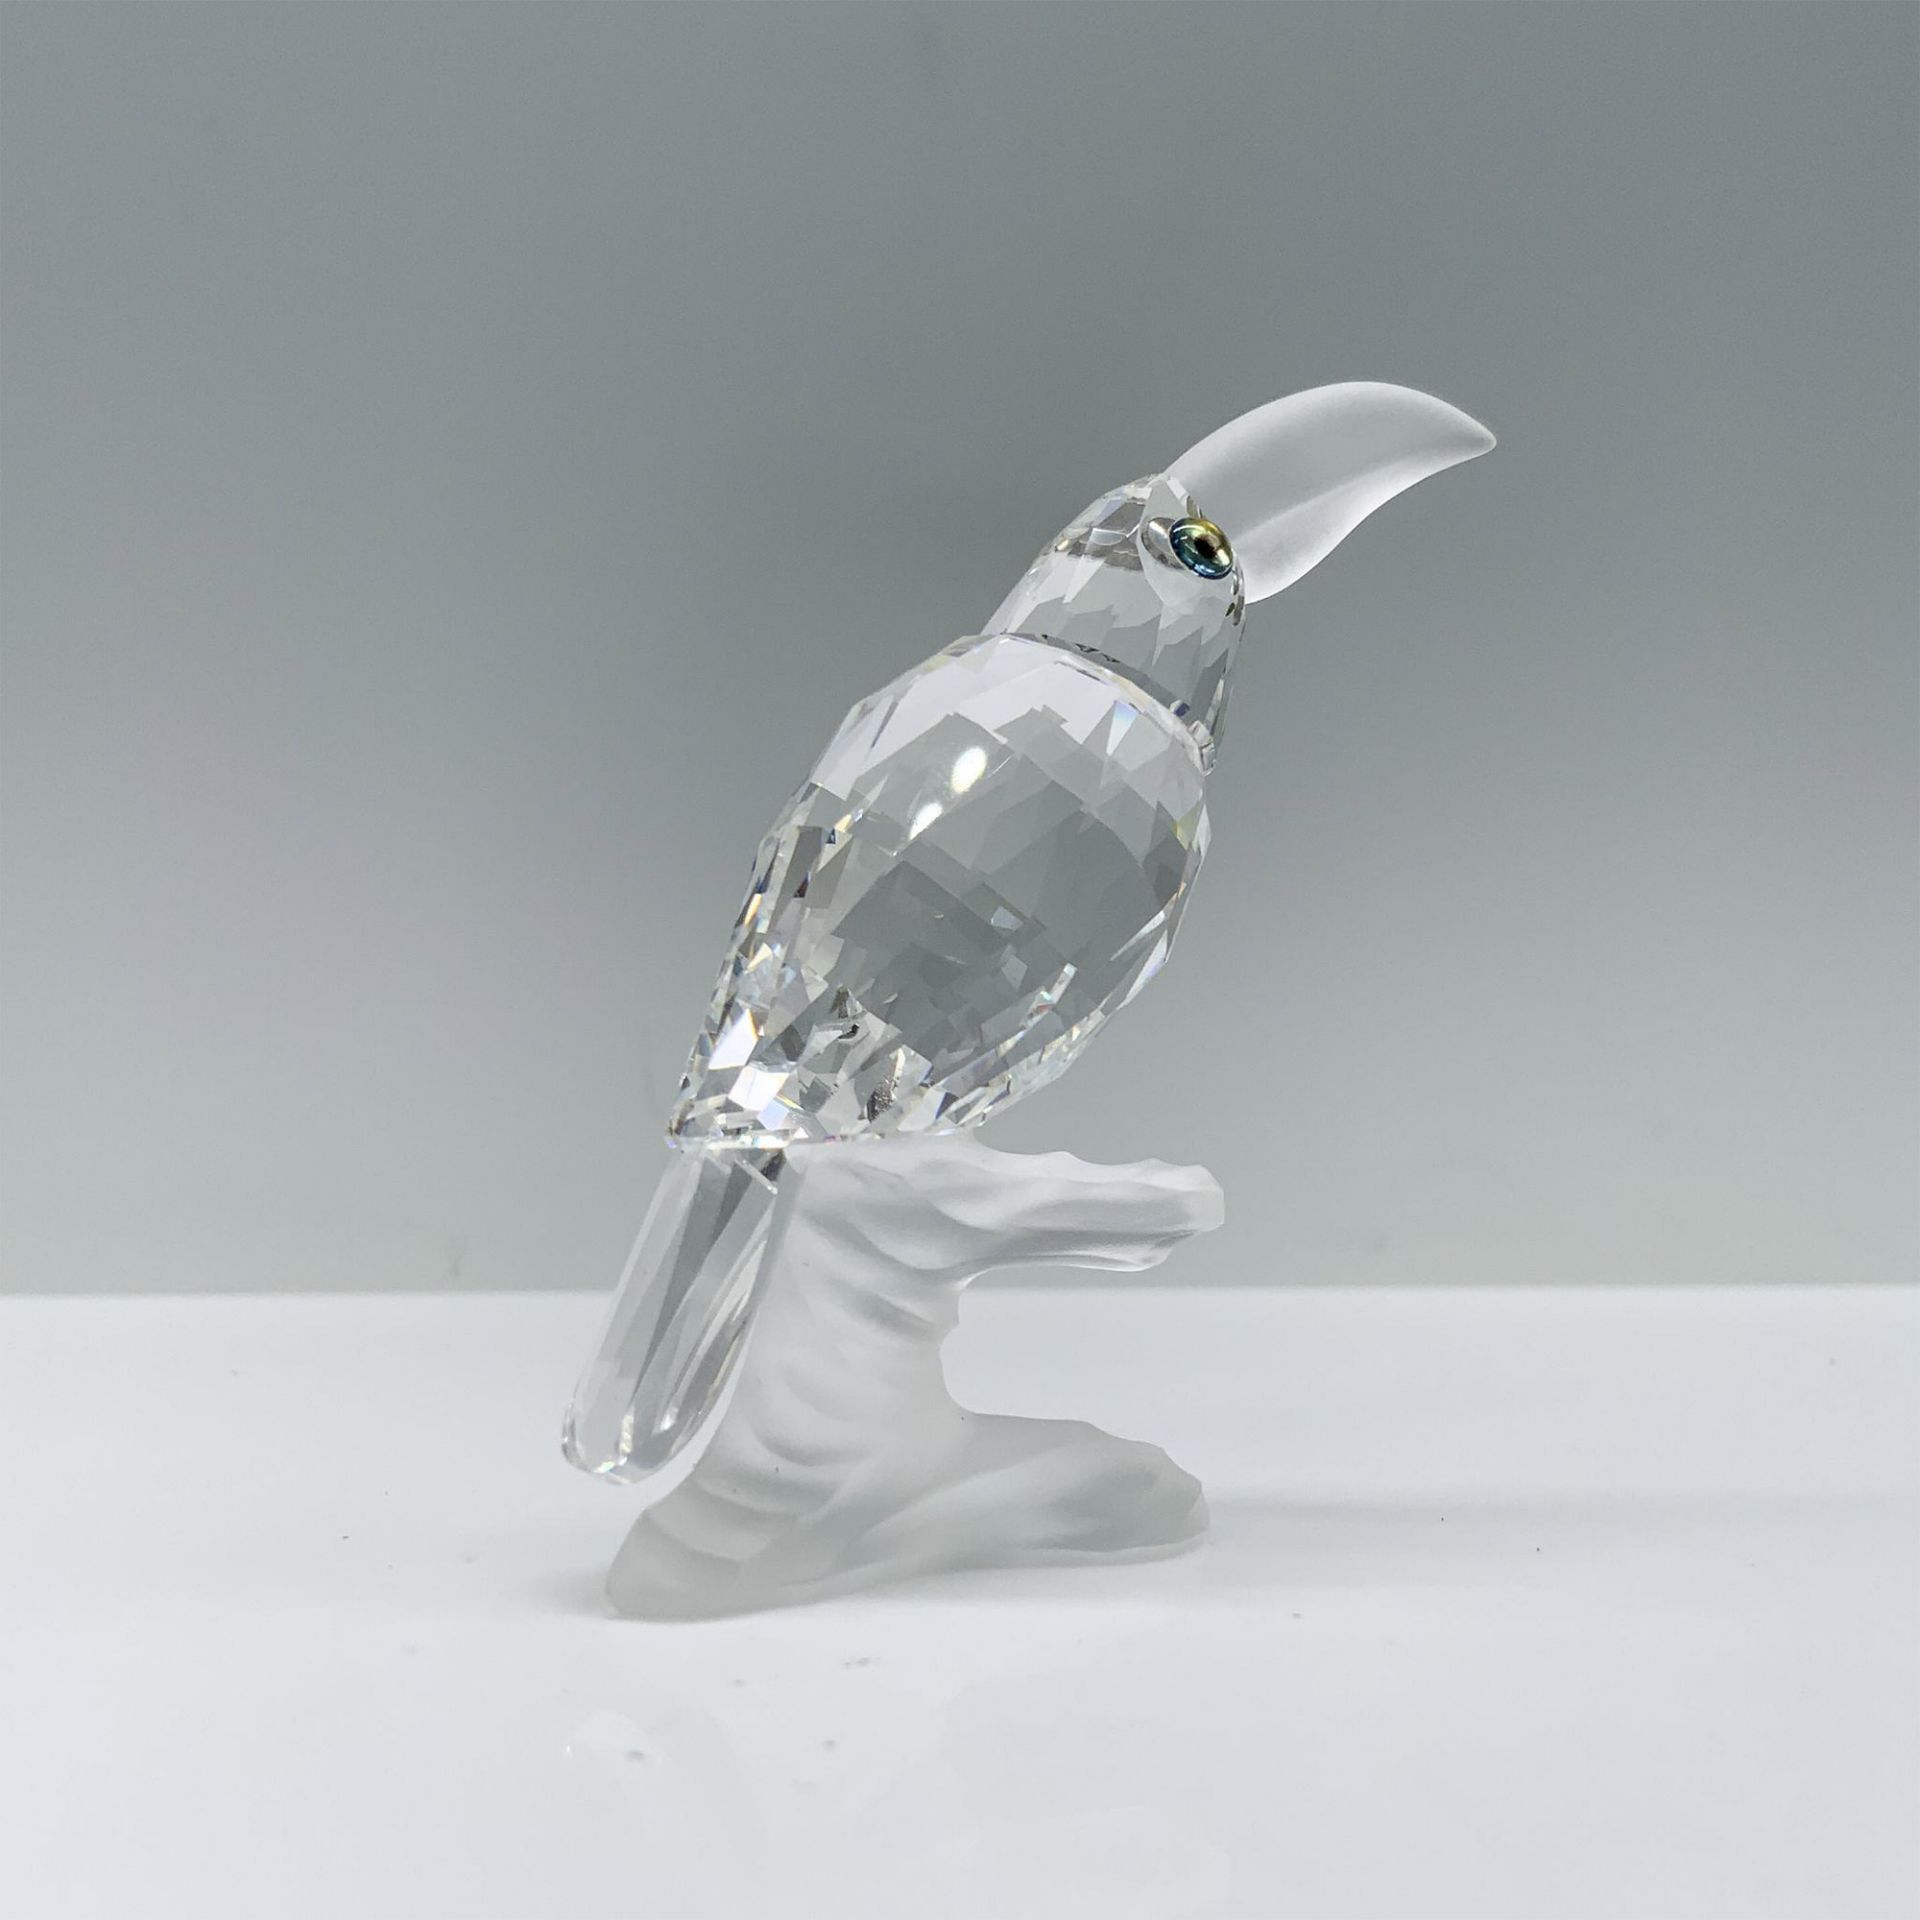 Swarovski Crystal Figurine, Toucan 119441 - Image 2 of 4